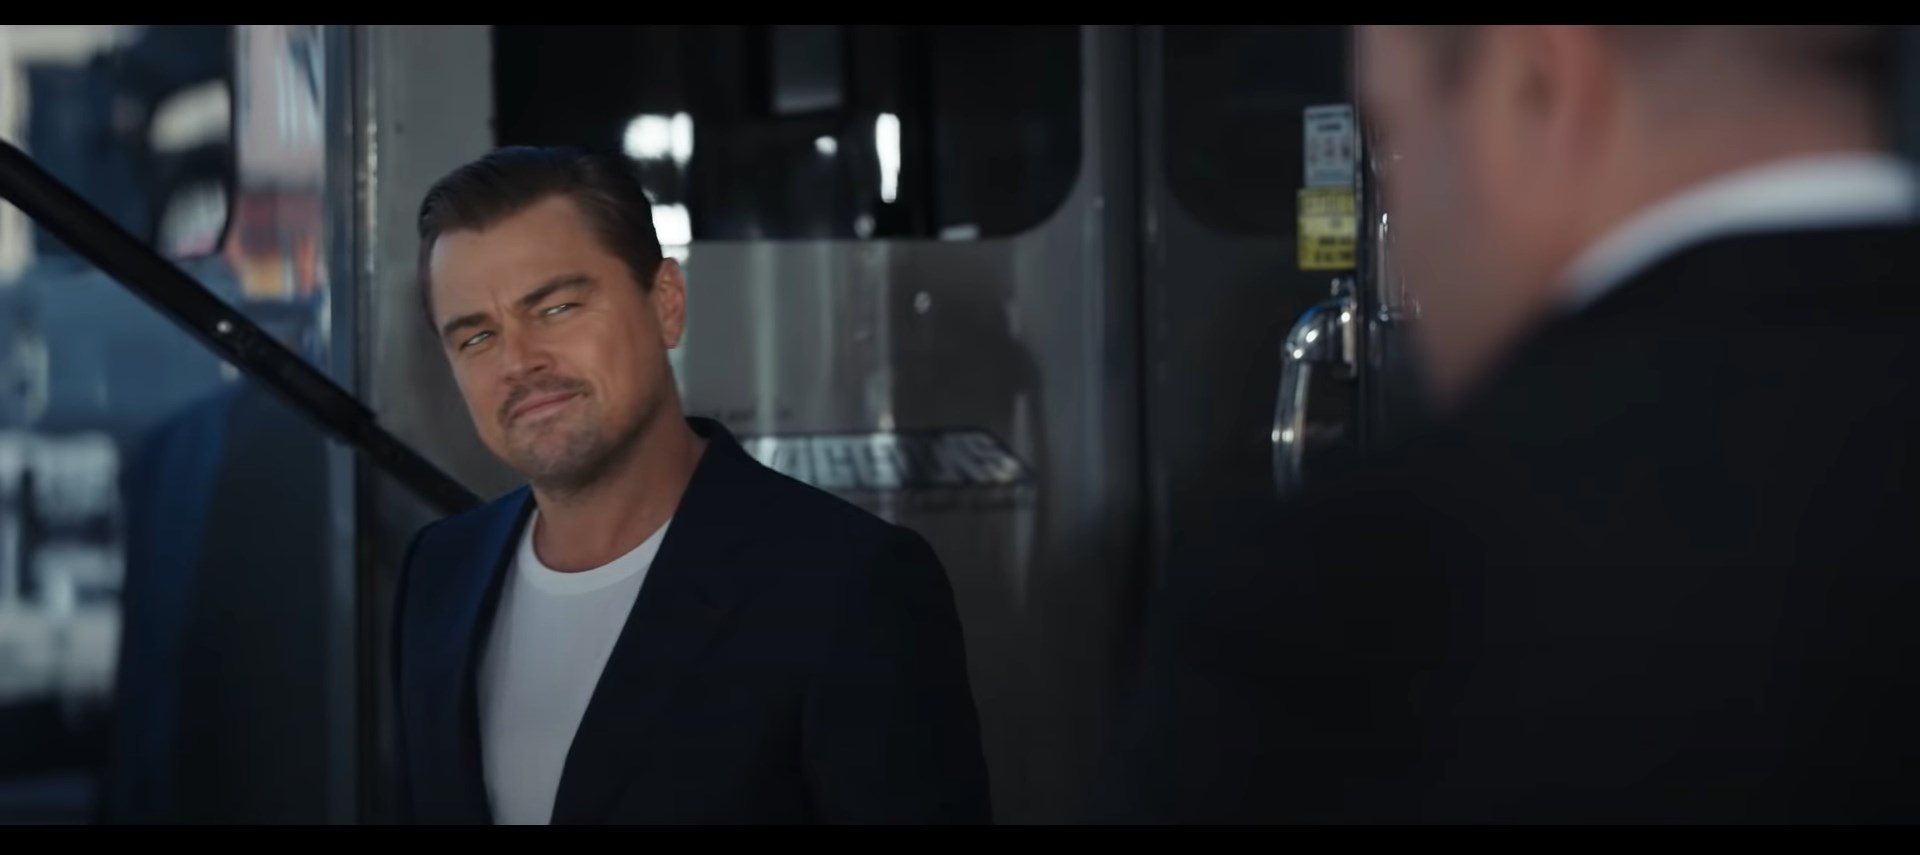 FIAT: FIAT 500 ad featuring Leonardo DiCaprio - DAILY COMMERCIALS